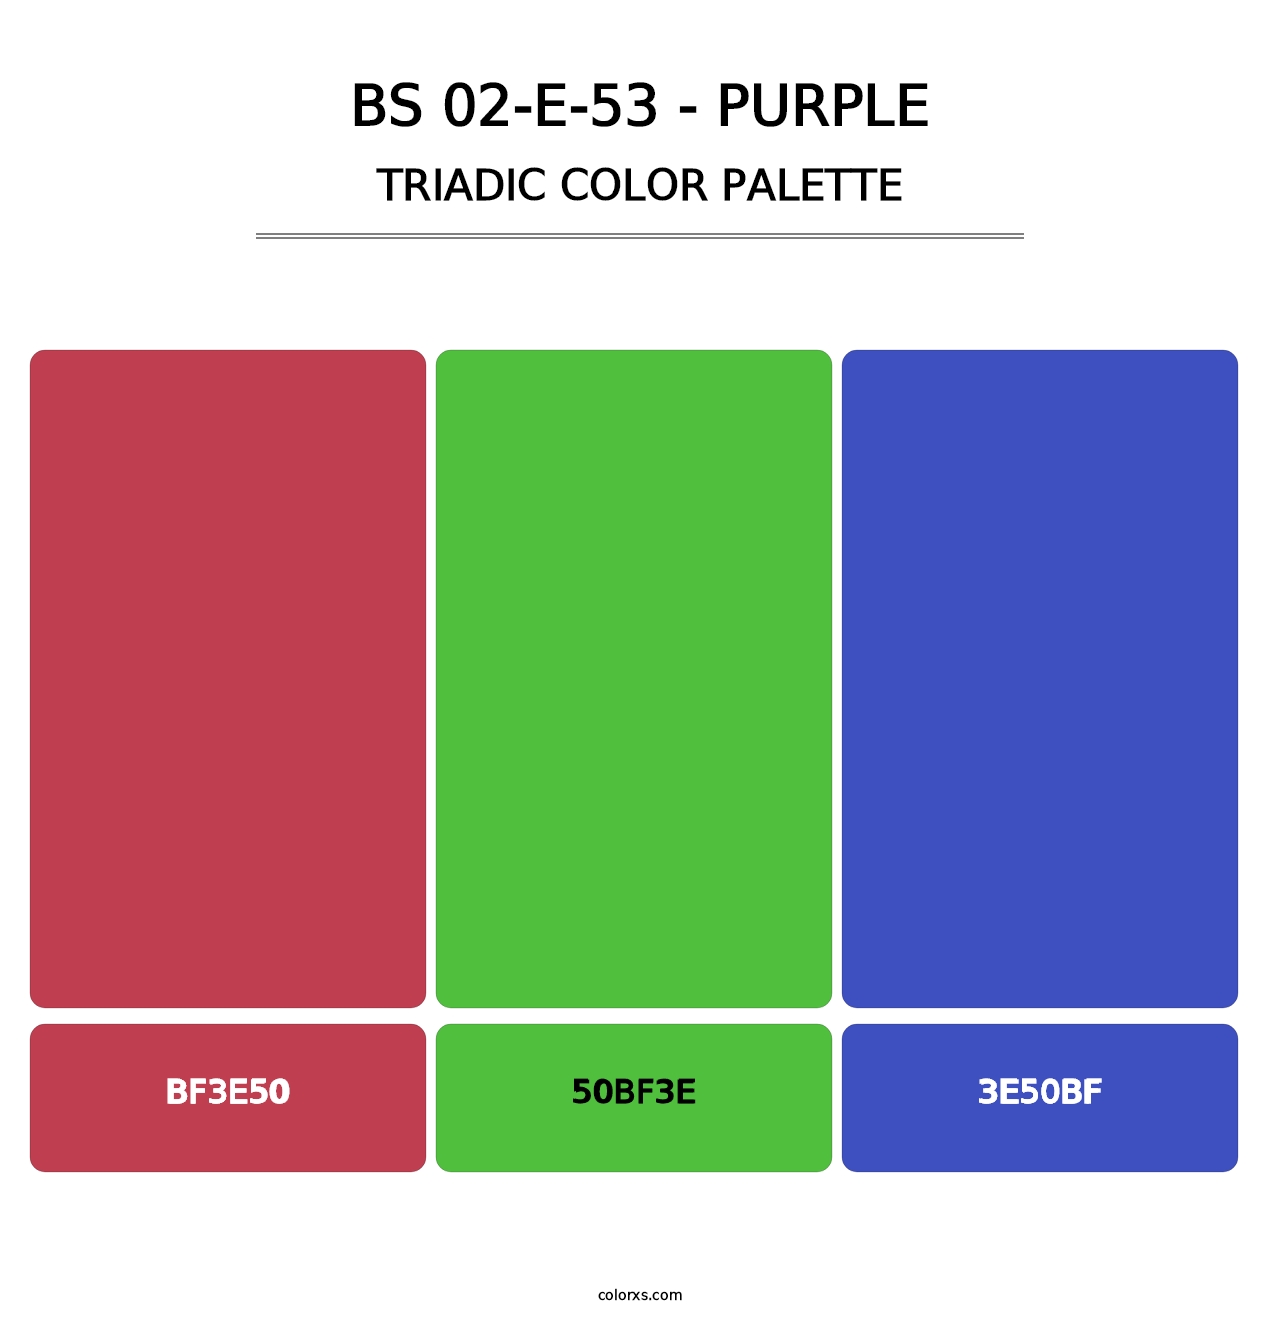 BS 02-E-53 - Purple - Triadic Color Palette